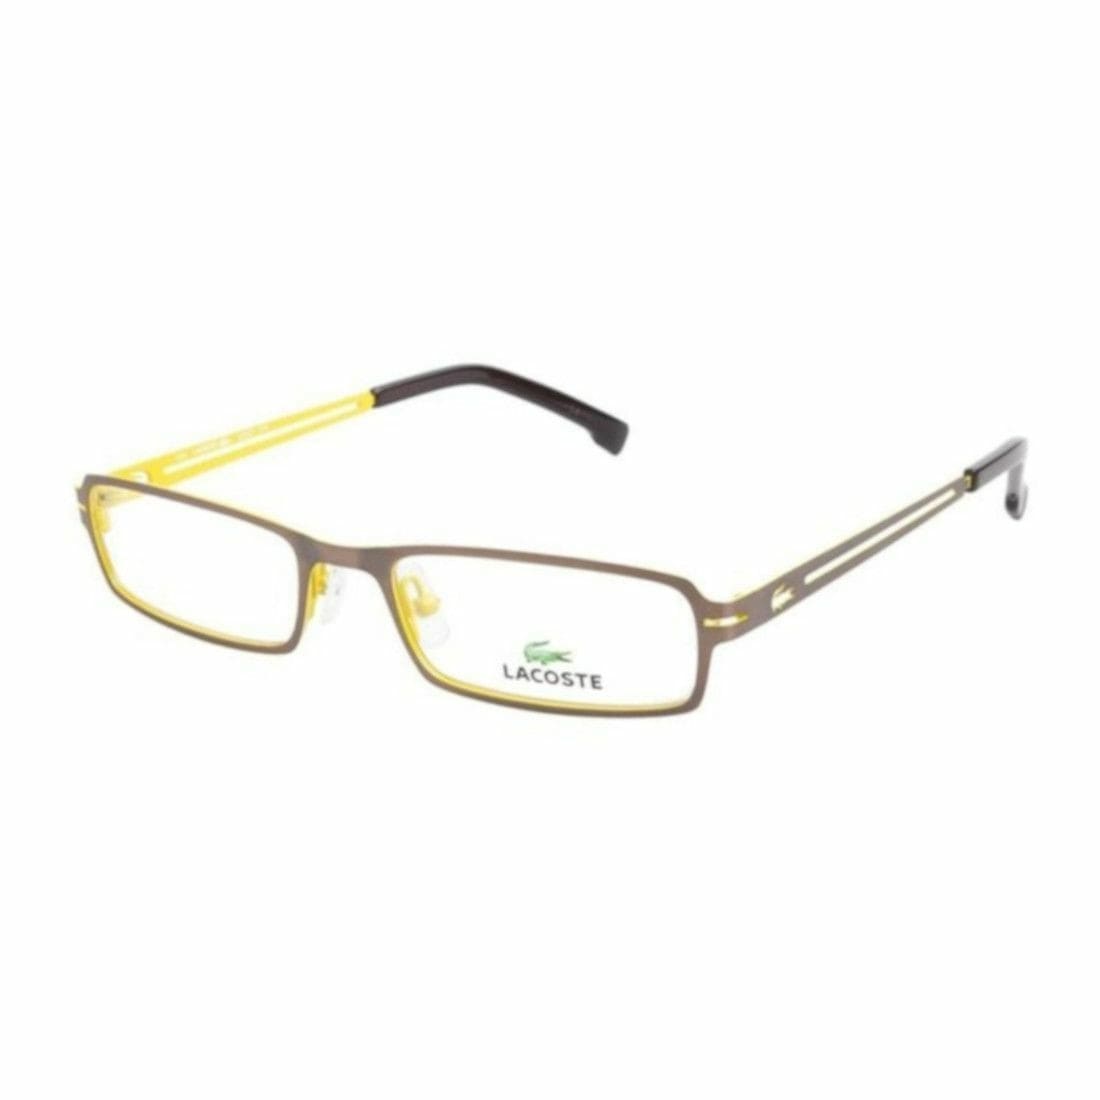 Lacoste L2121-714 Gold Yellow Rectangular Unisex Metal Eyeglasses